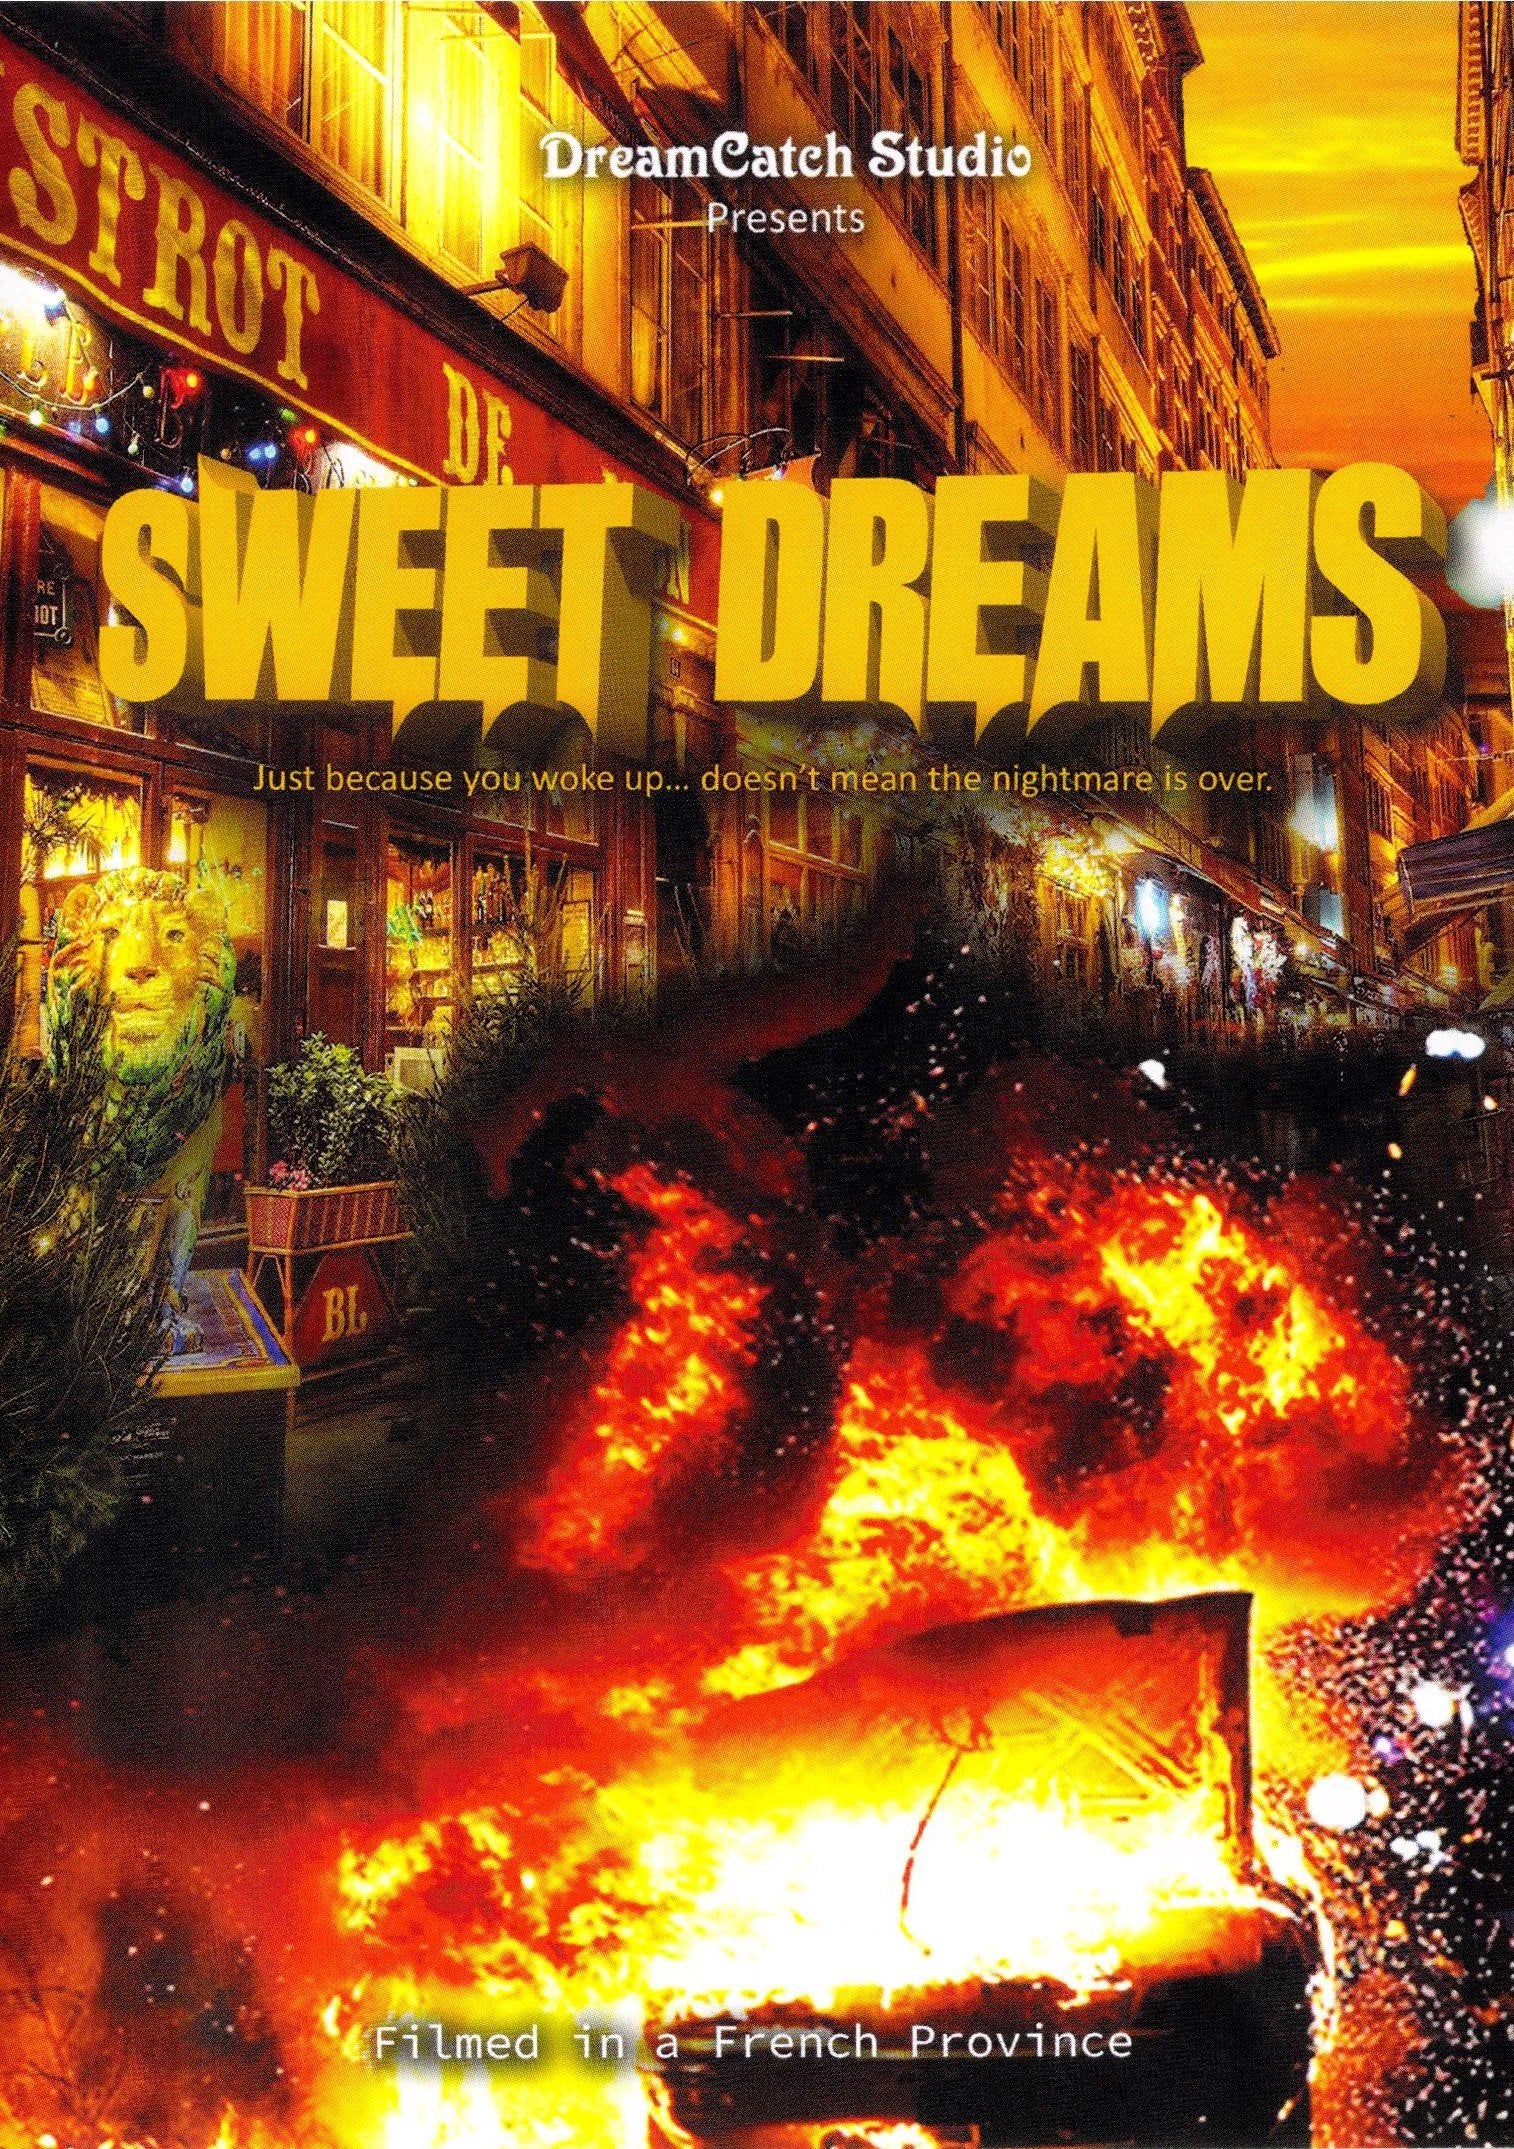 Dream Catch Studio - Sweet Dreams (Video)